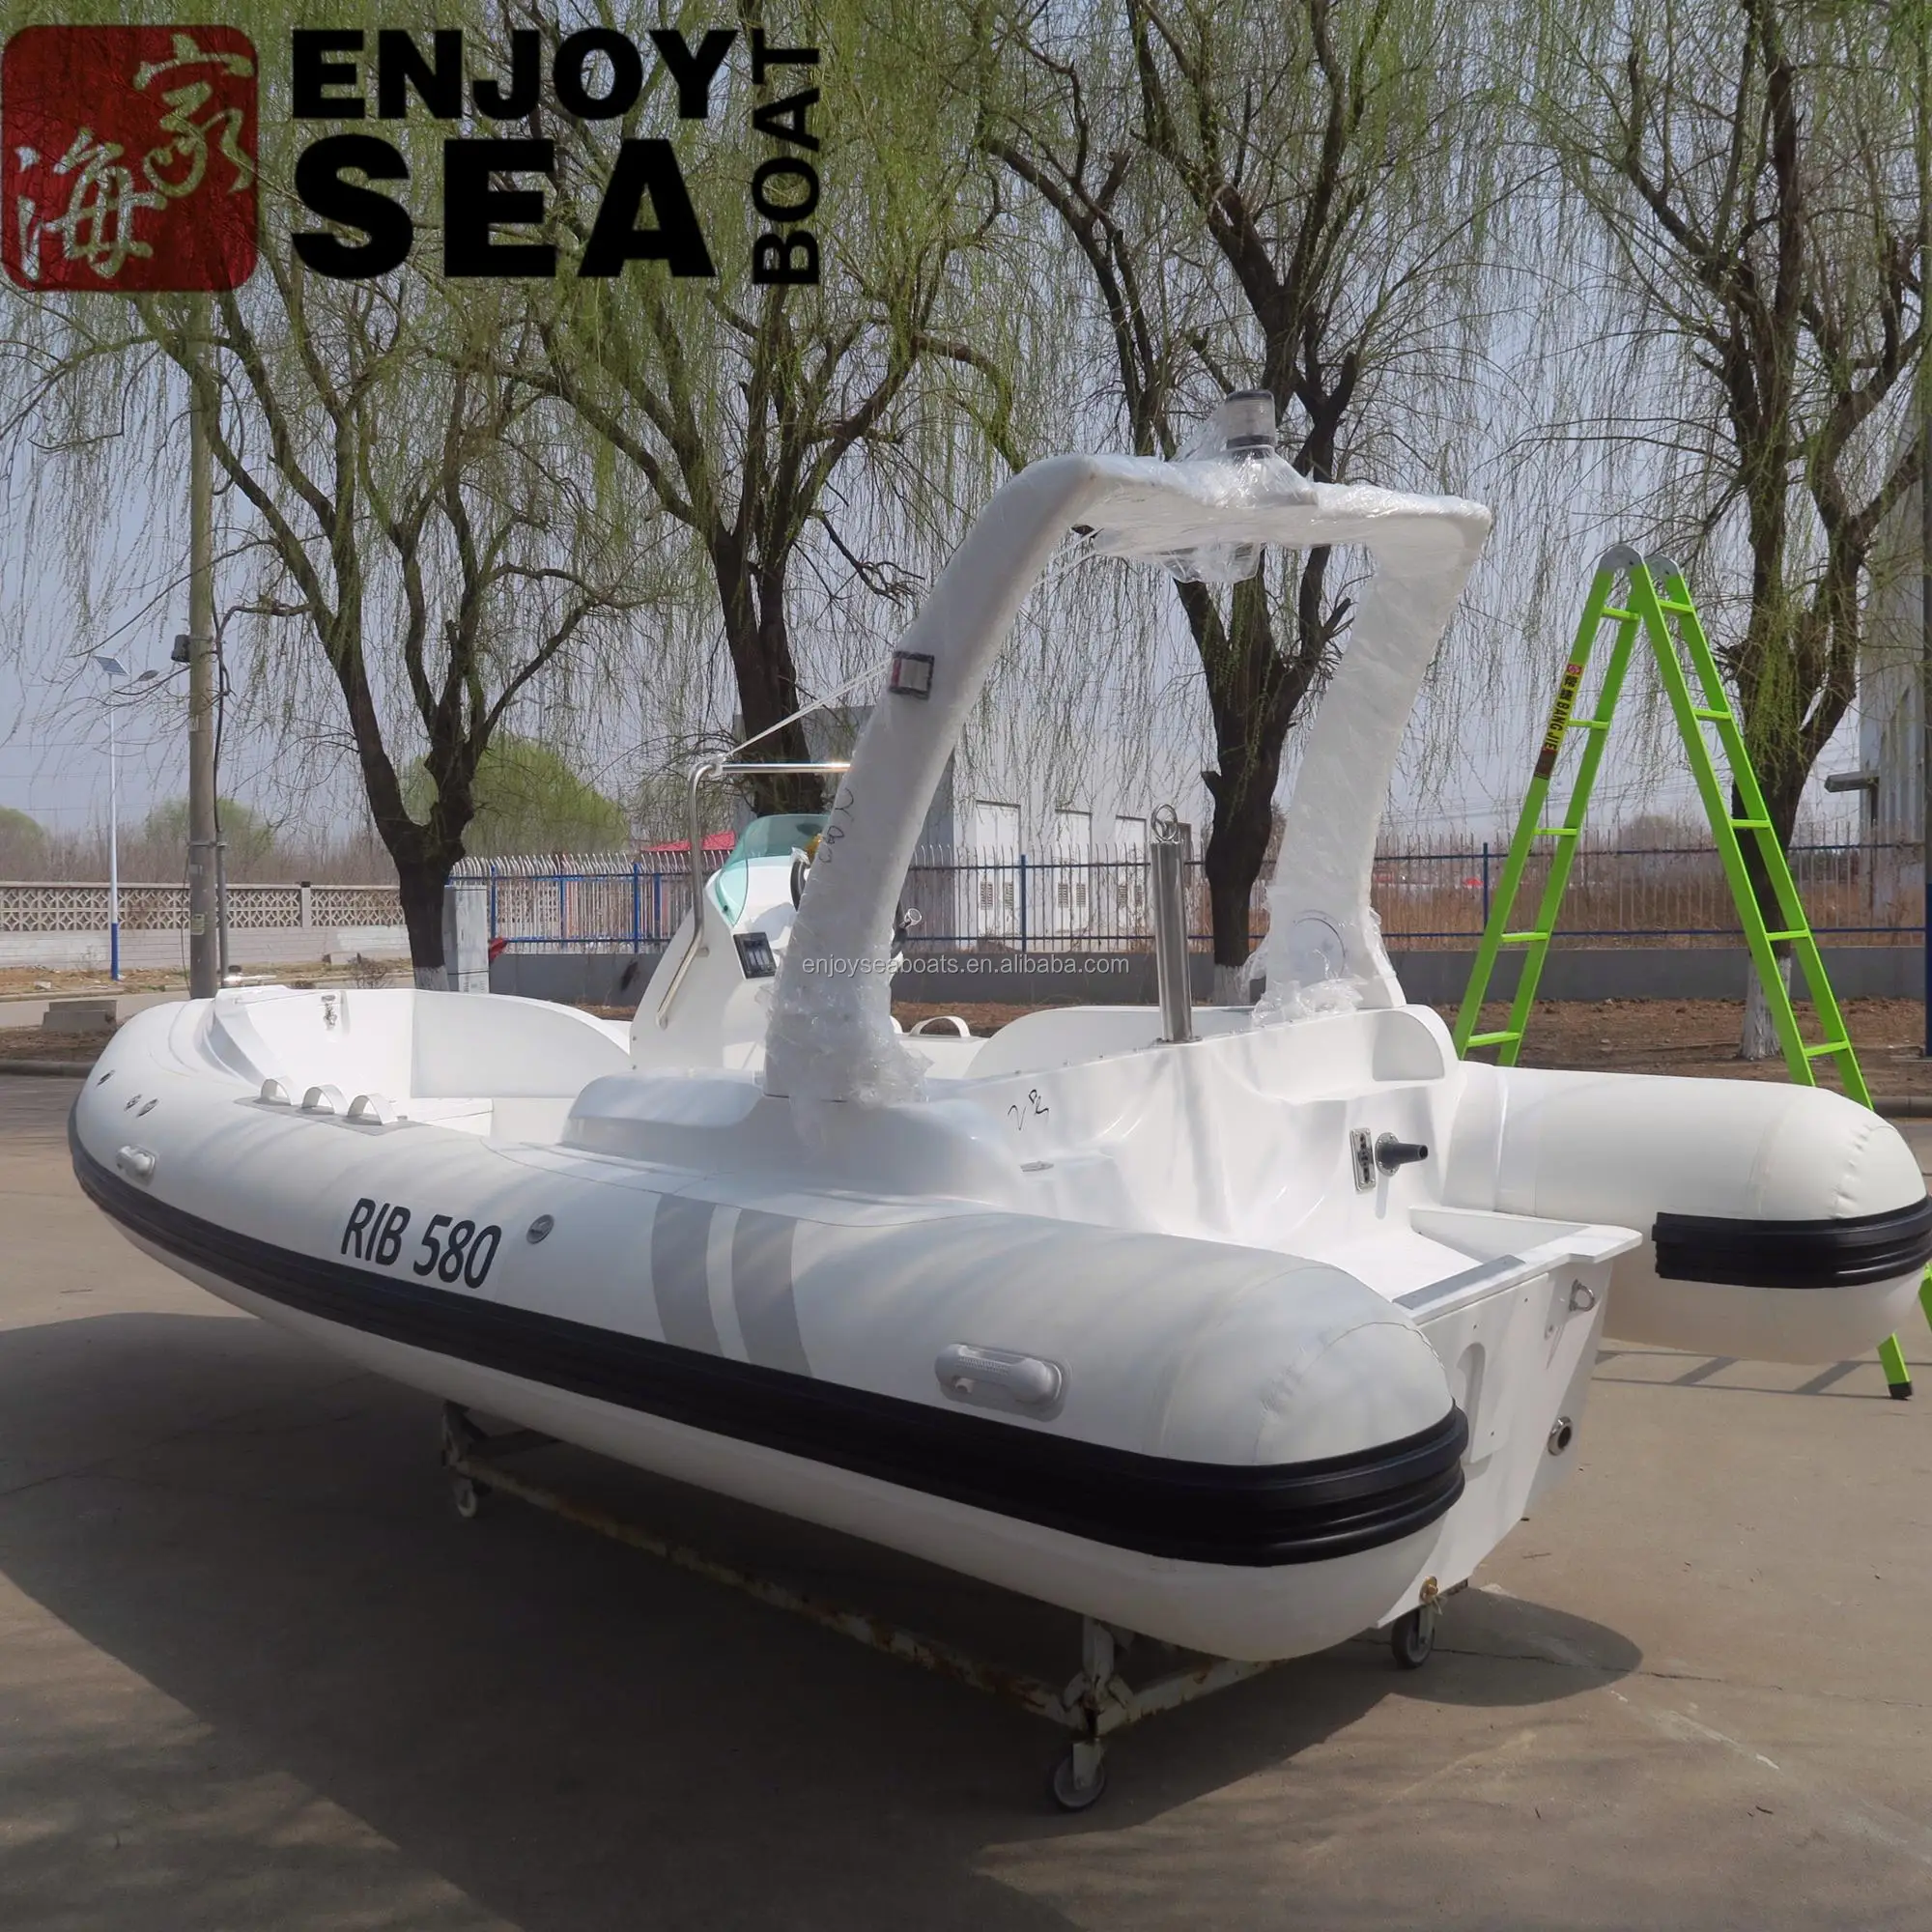 
1.2mm pvc inflatable speed motor boat / marine motor launch with RIB-580 from enjoysea jiahai boats 